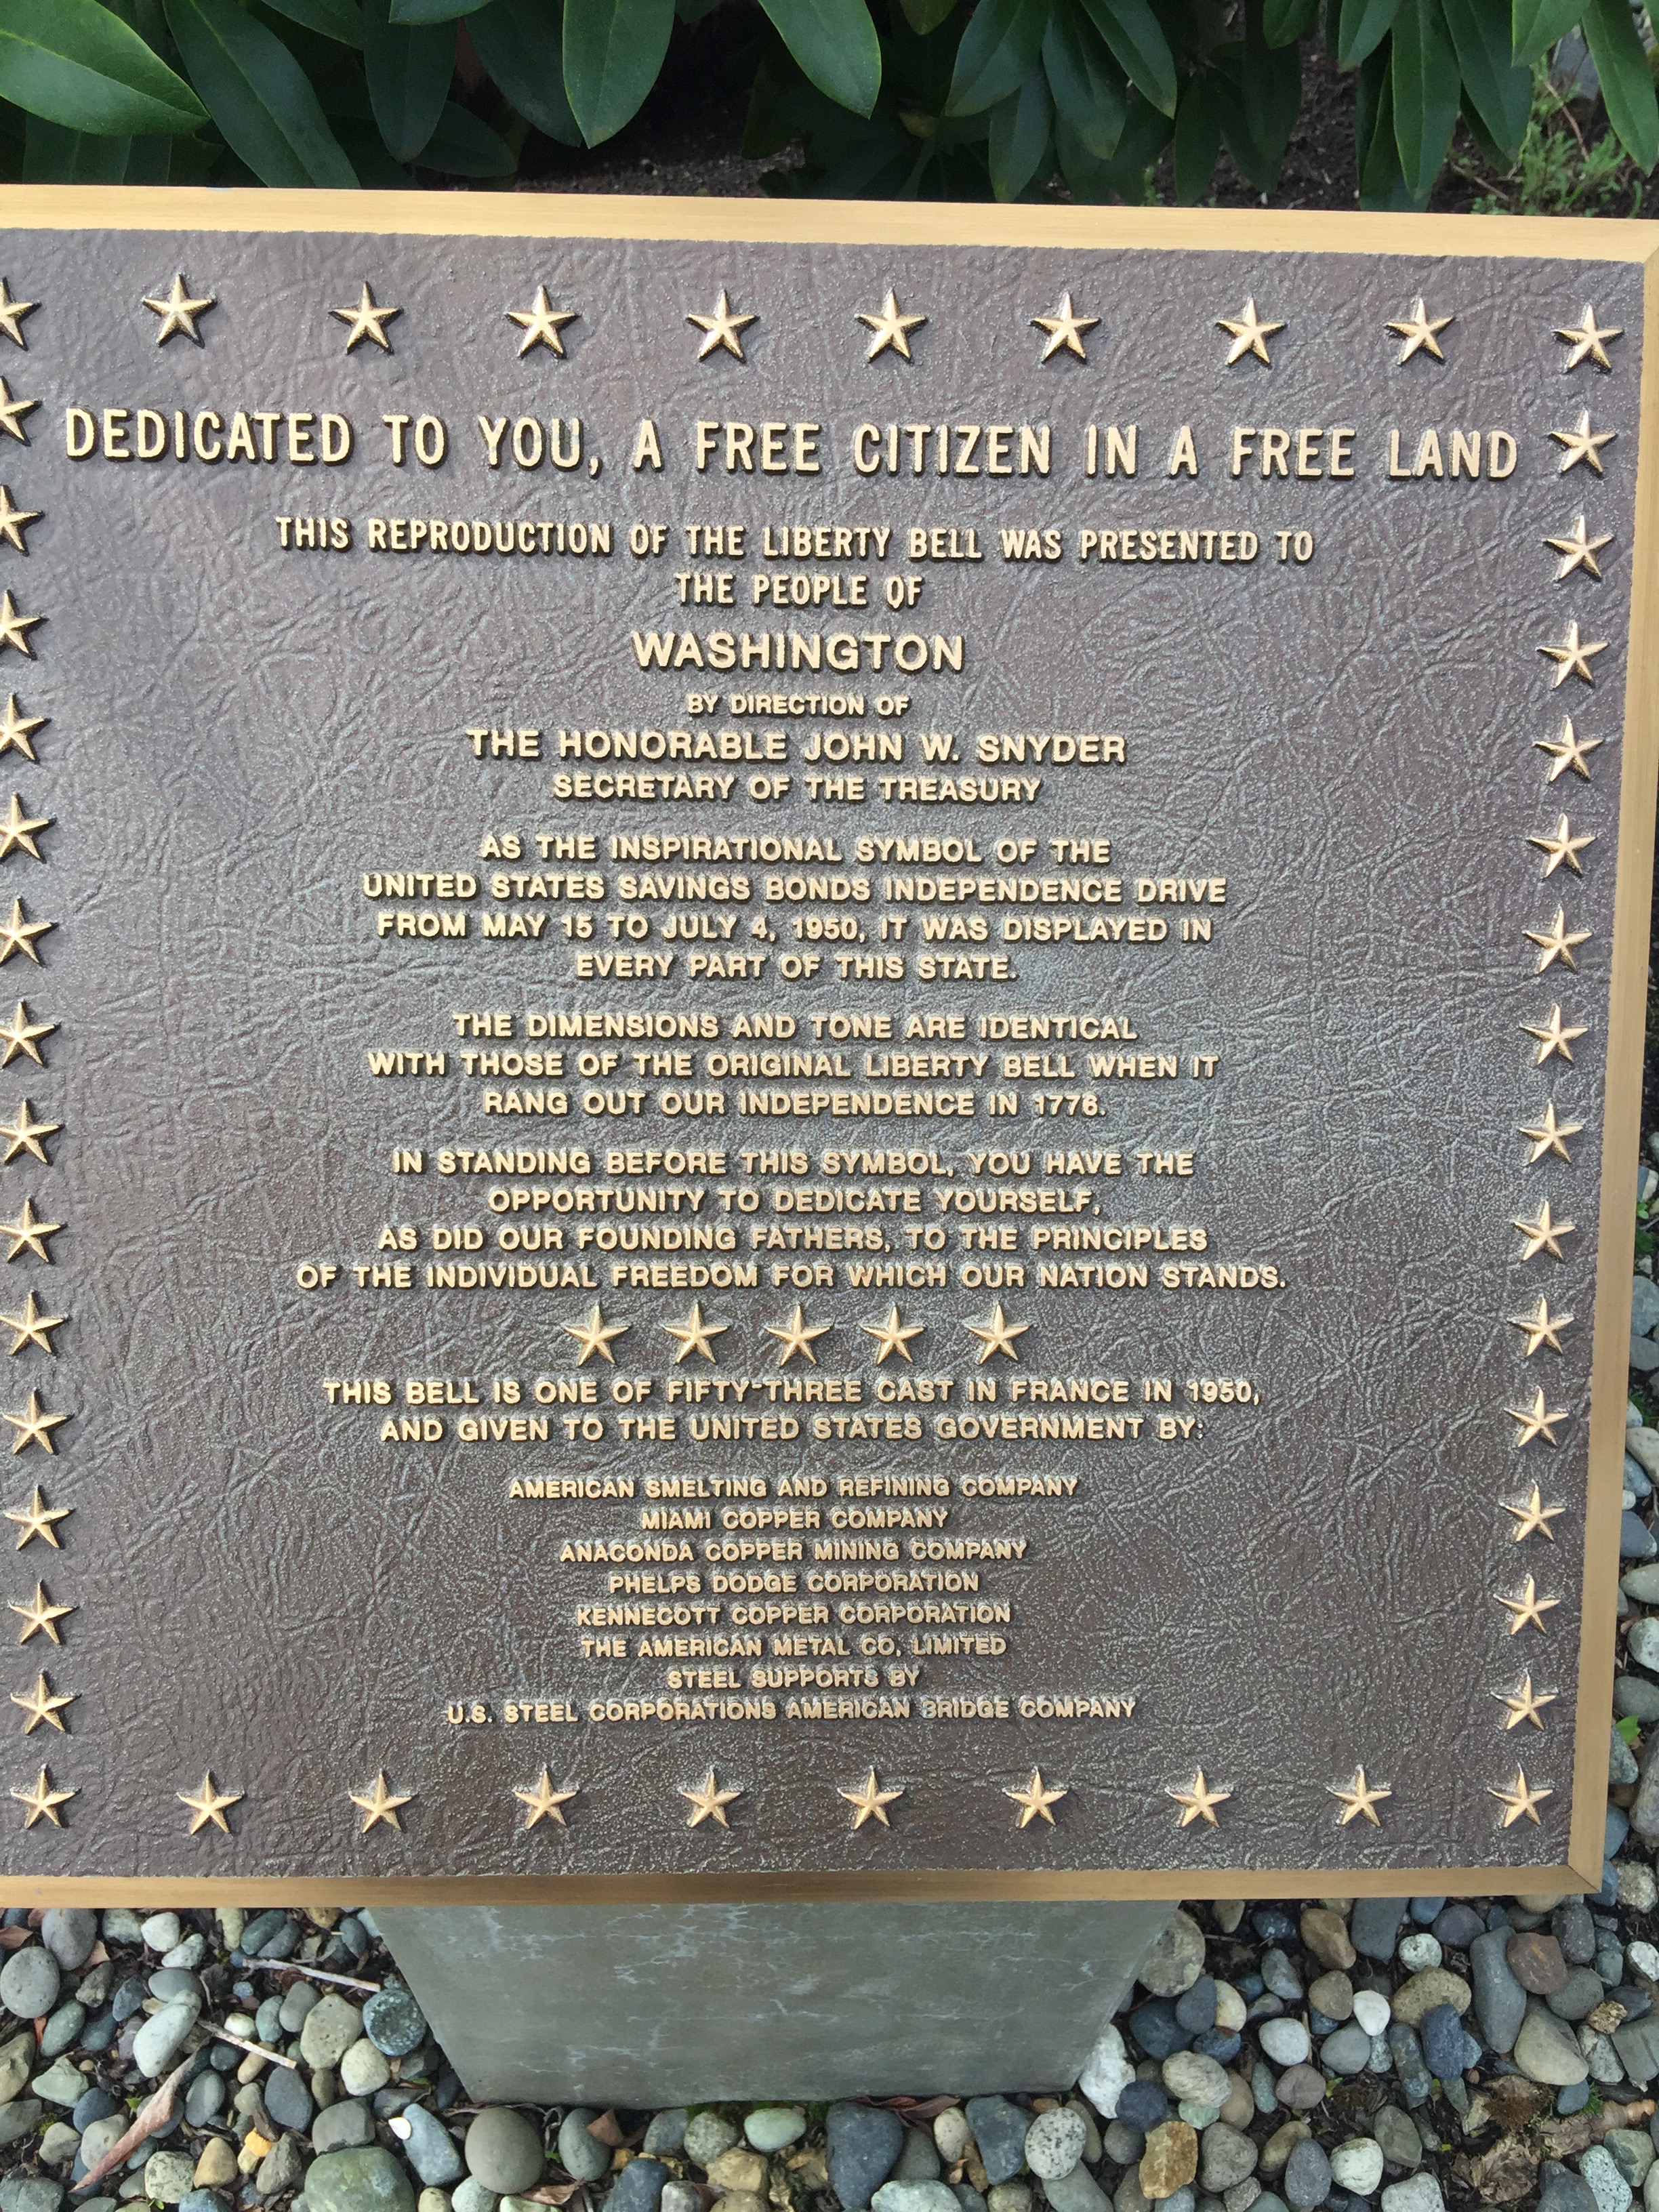 Tacoma Washington Liberty Bell Replica, dedication plaque